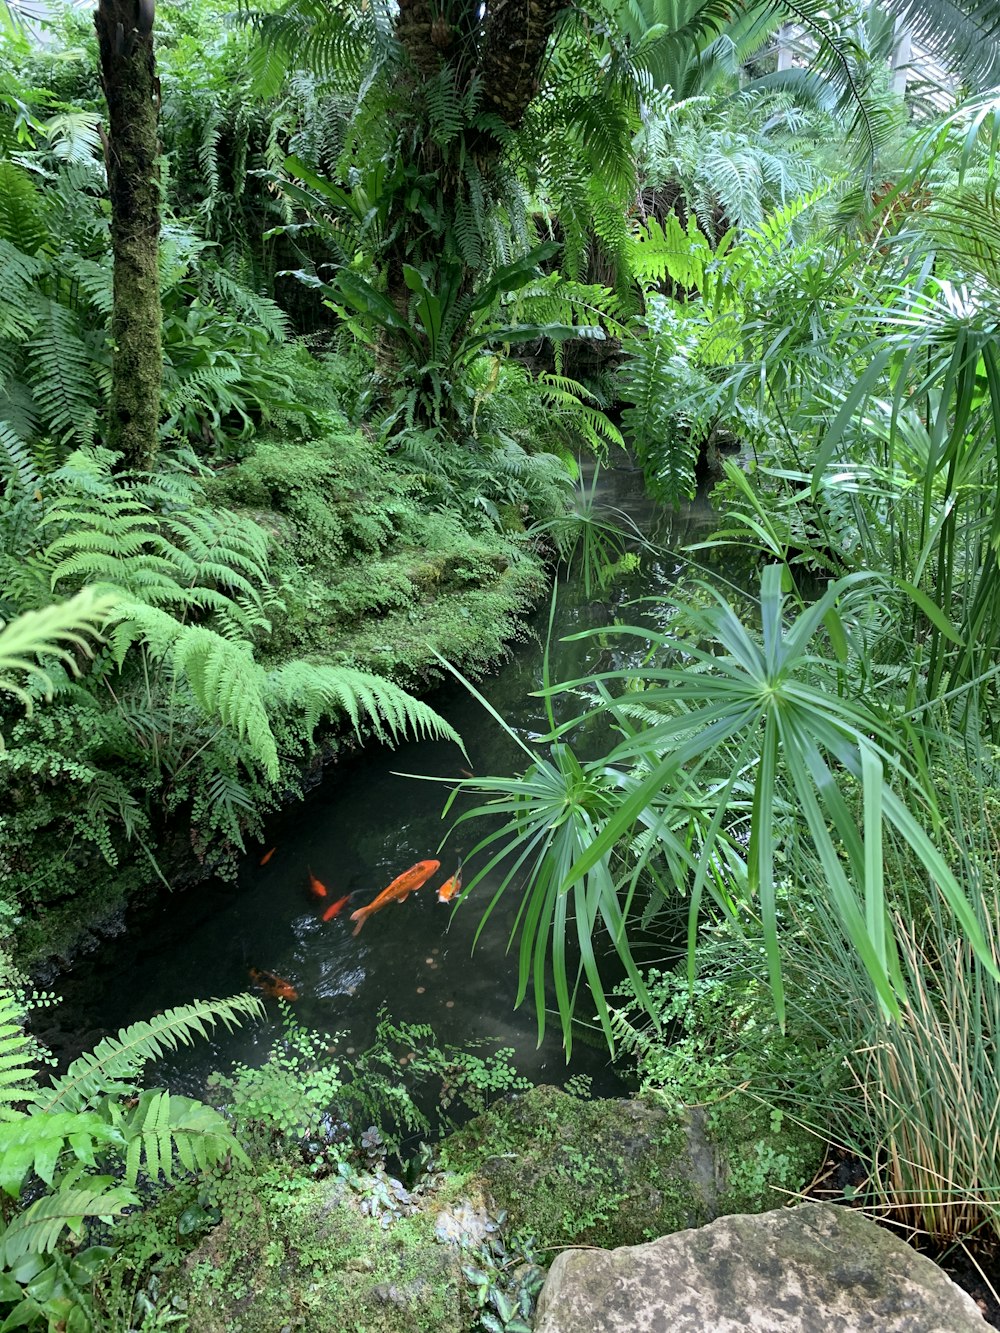 orange fish on pond between plants